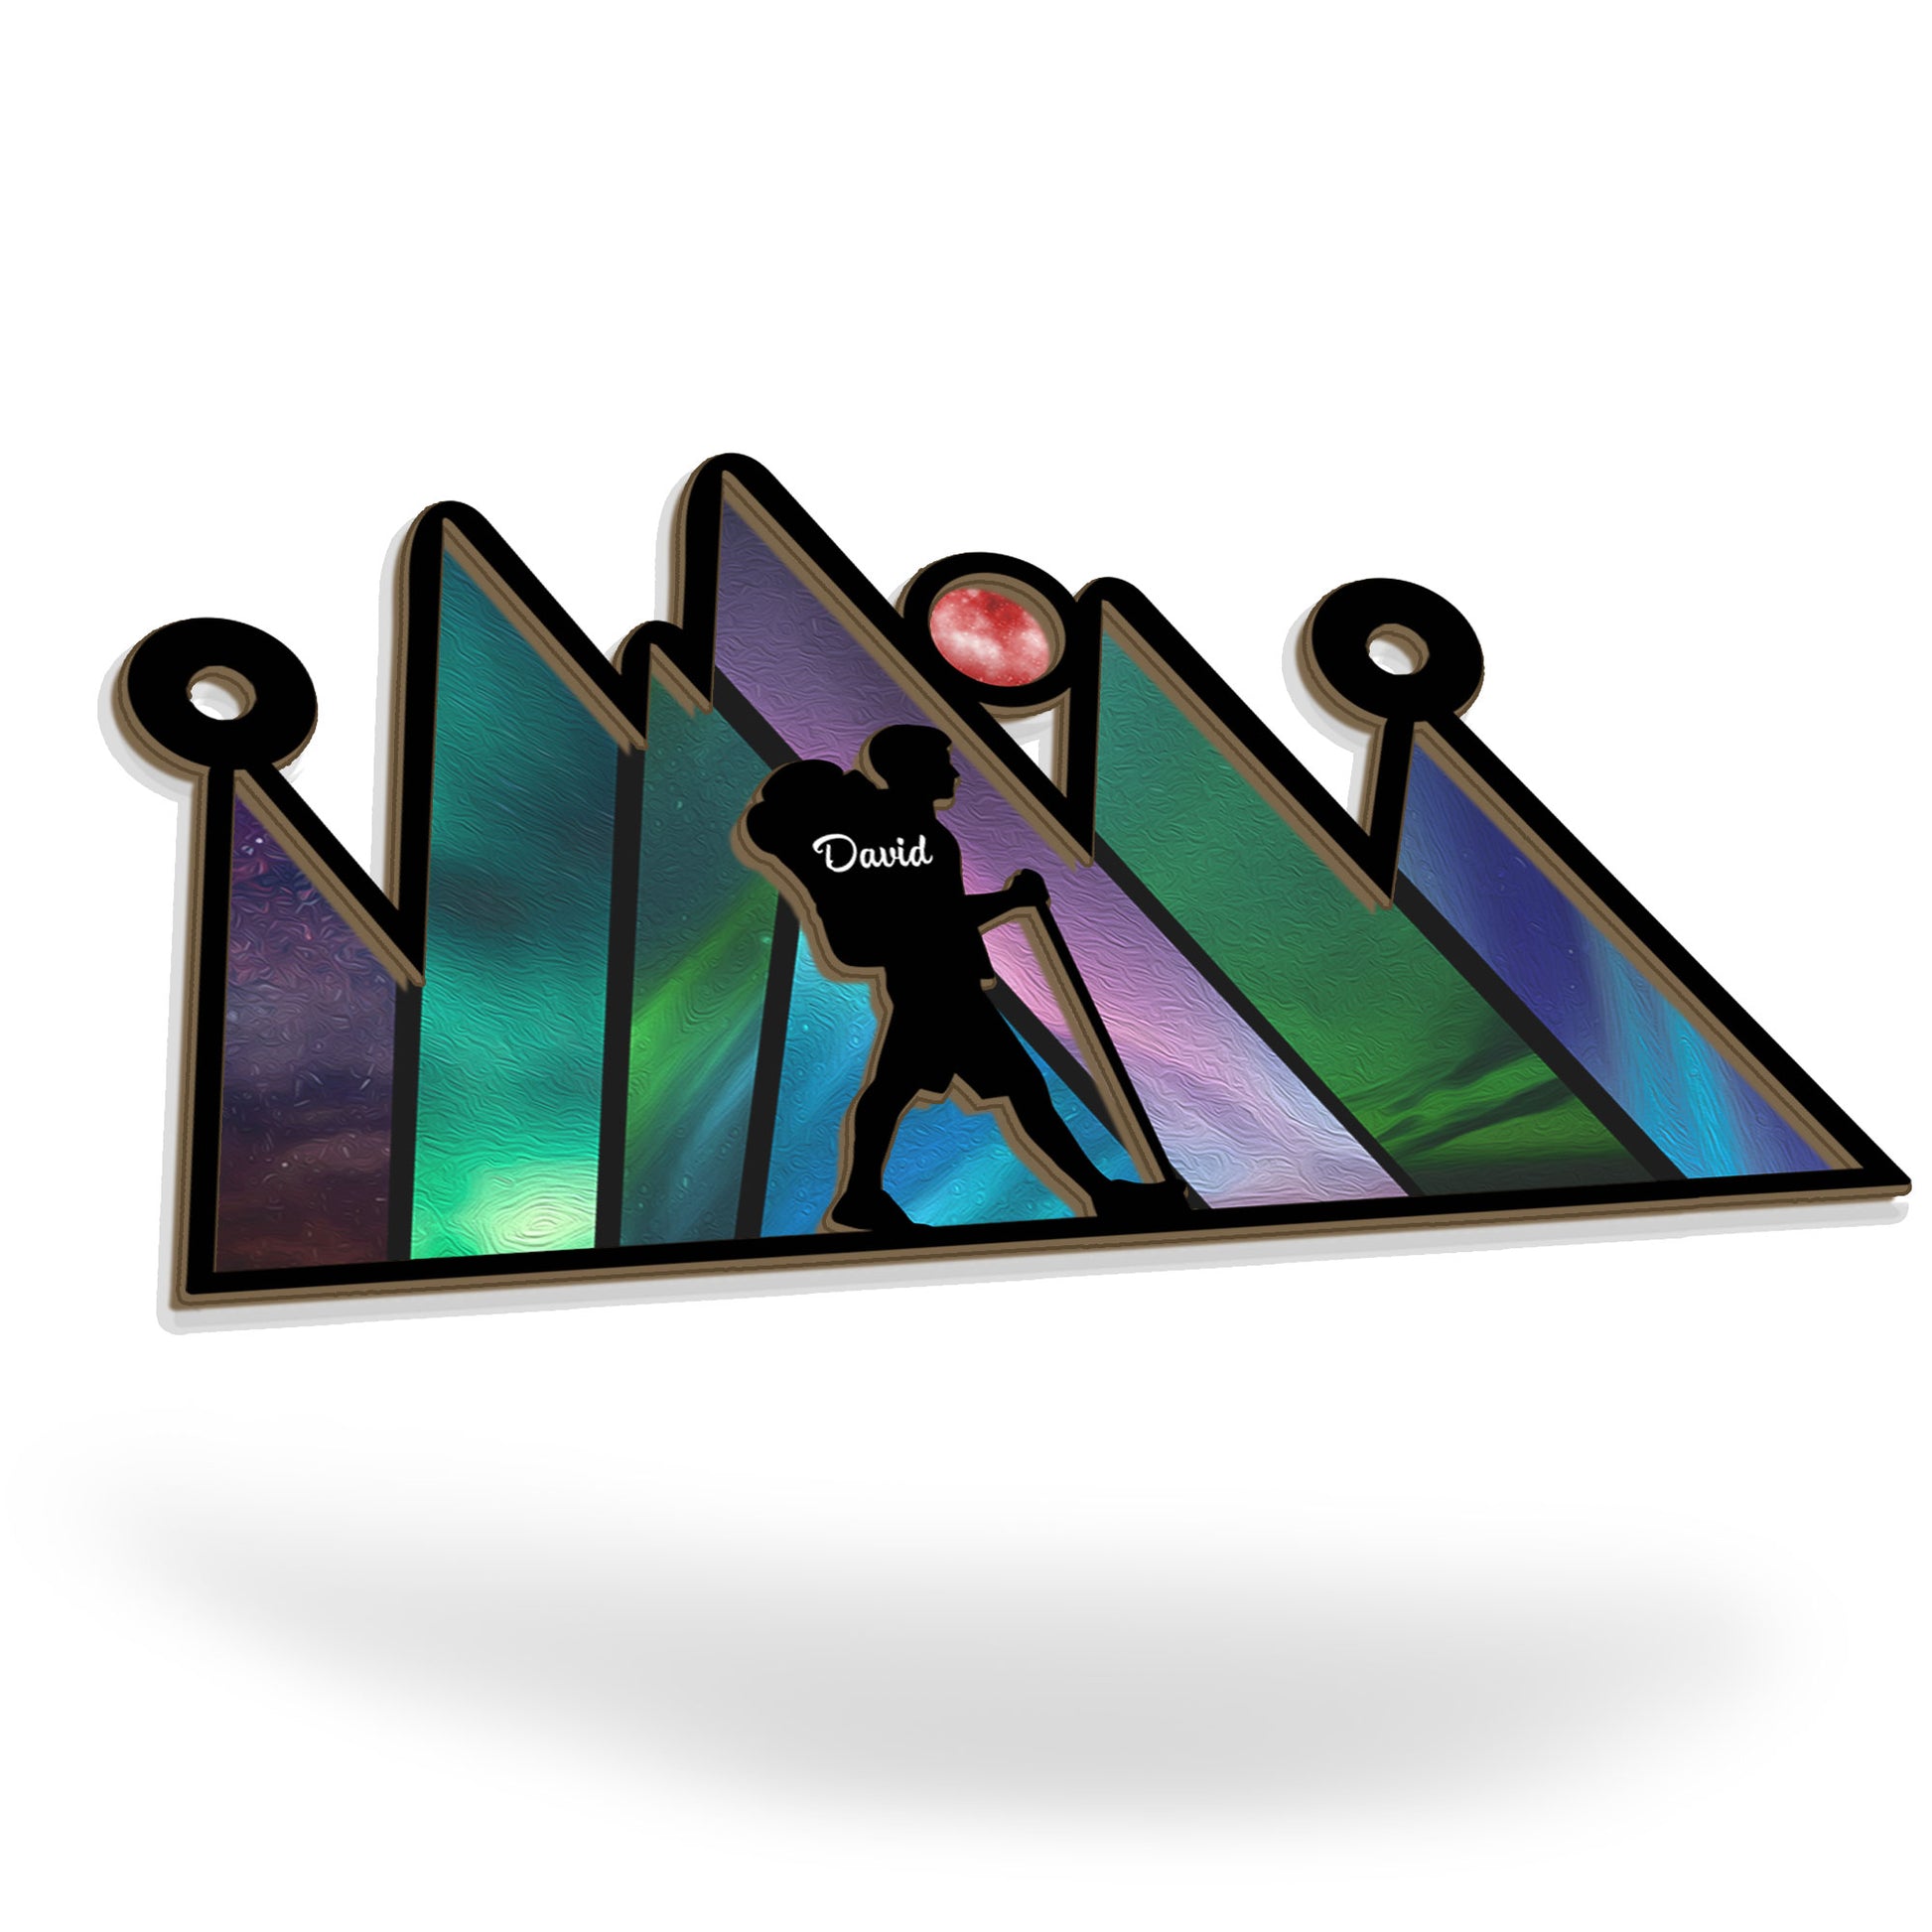 Mountain Hiking - Personalized Window Hanging Suncatcher Ornament